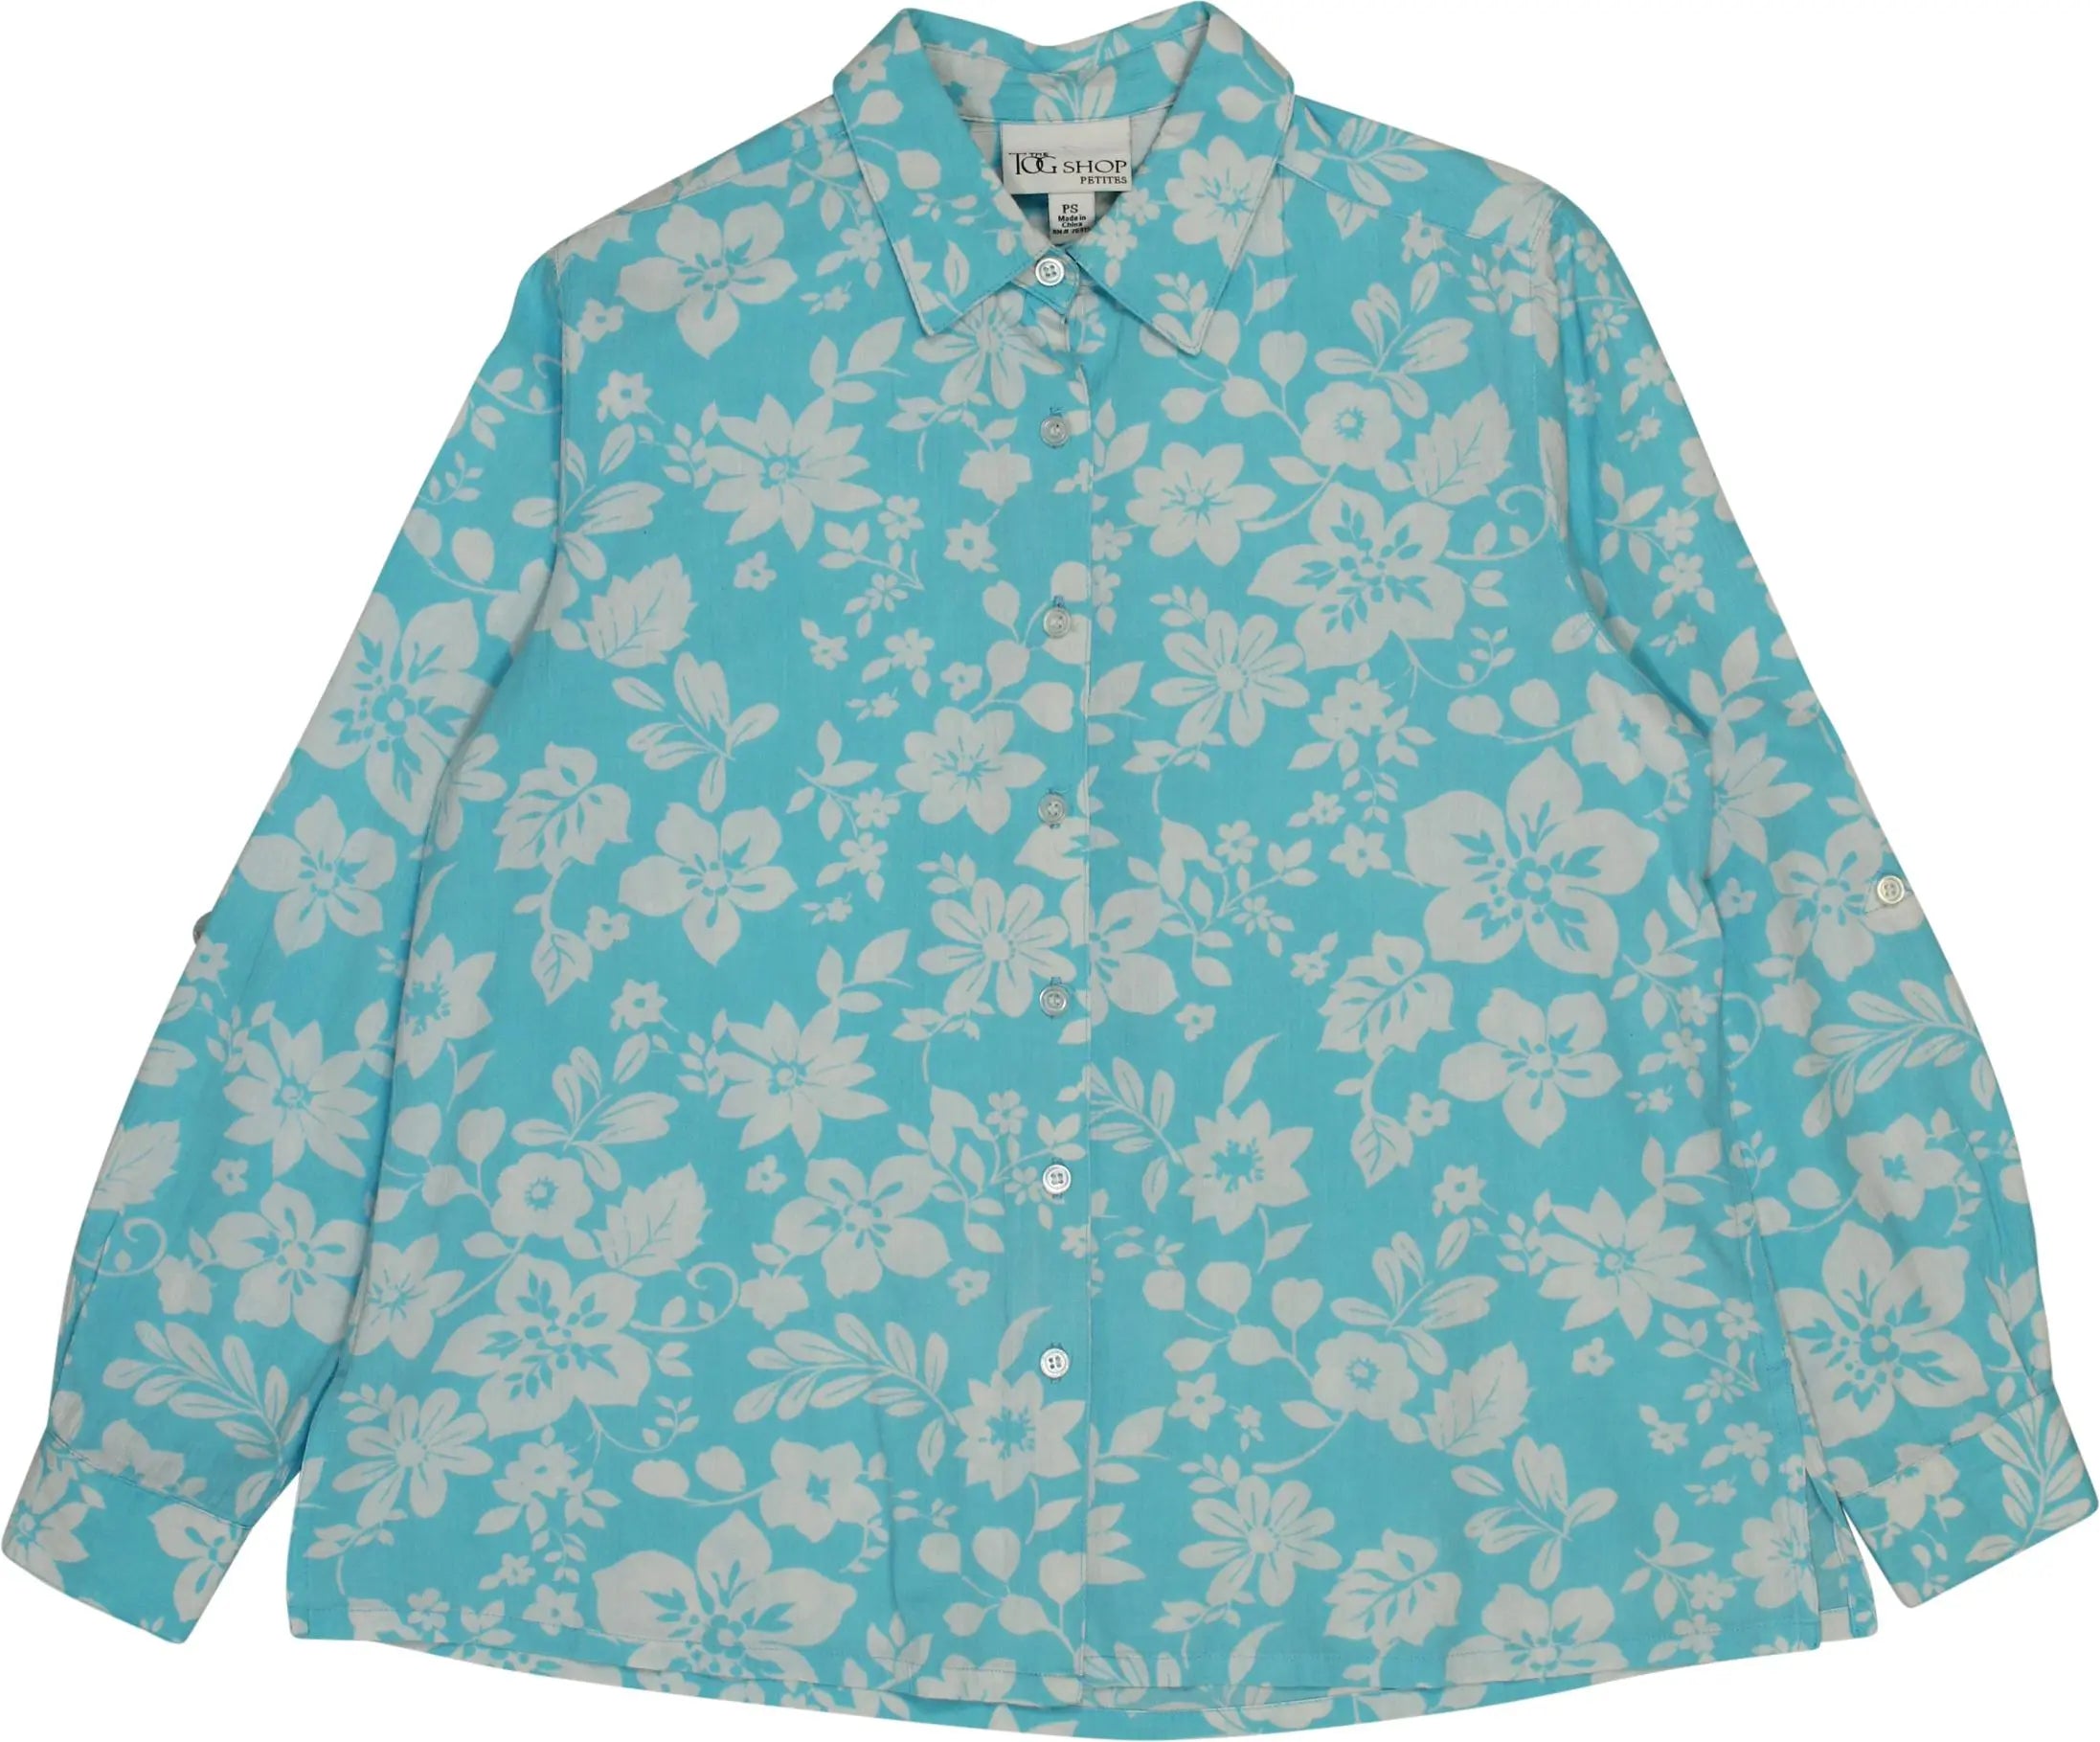 The Tog Shop - Floral Shirt- ThriftTale.com - Vintage and second handclothing